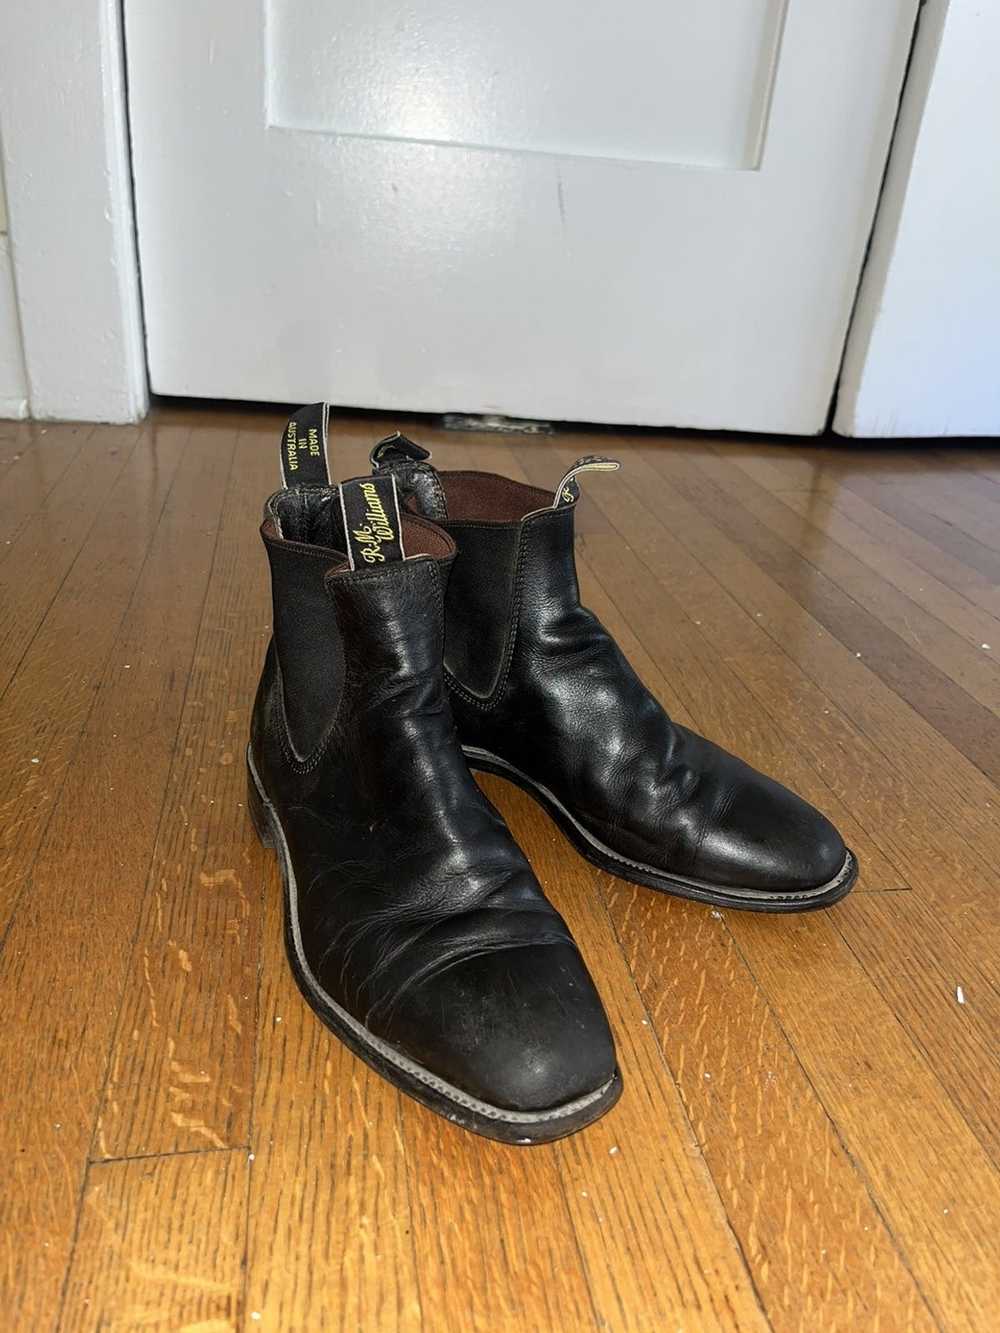 Rm Williams Women black Australian Slip On Leather Boots Size AUS 4.5 G  Women 7